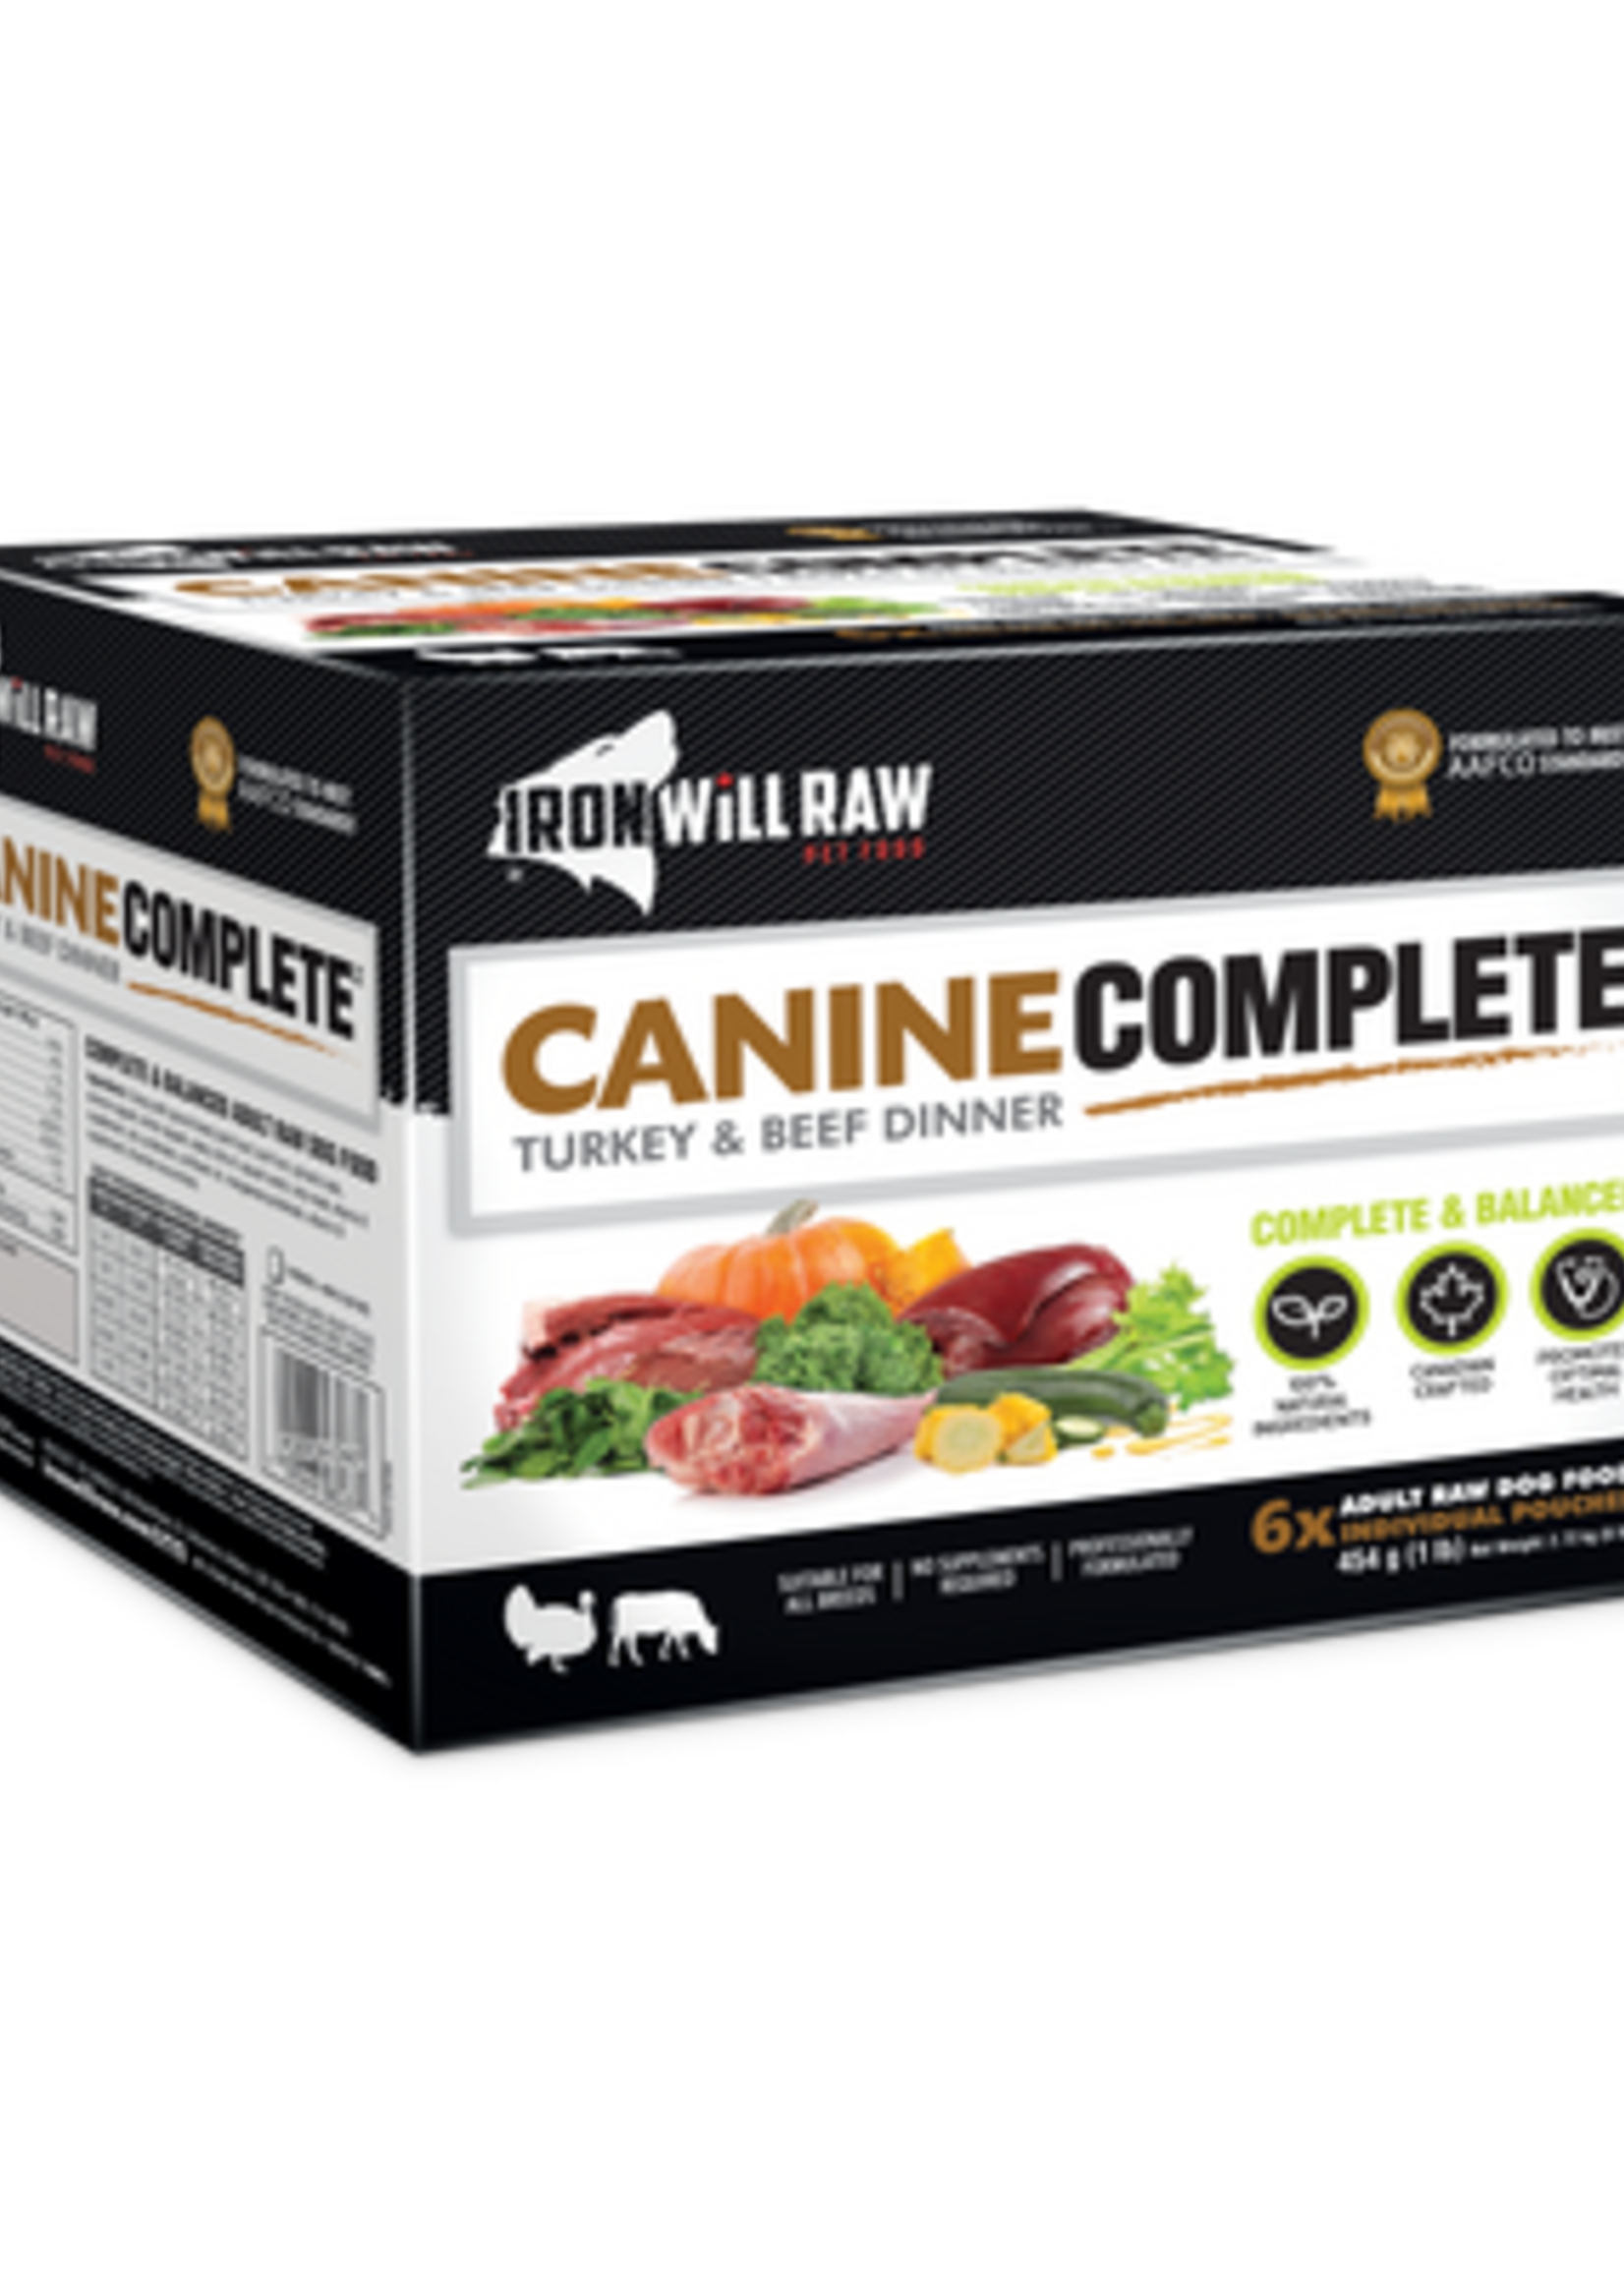 Iron Will Iron Will Raw Canine Complete Turkey & Beef Dinner